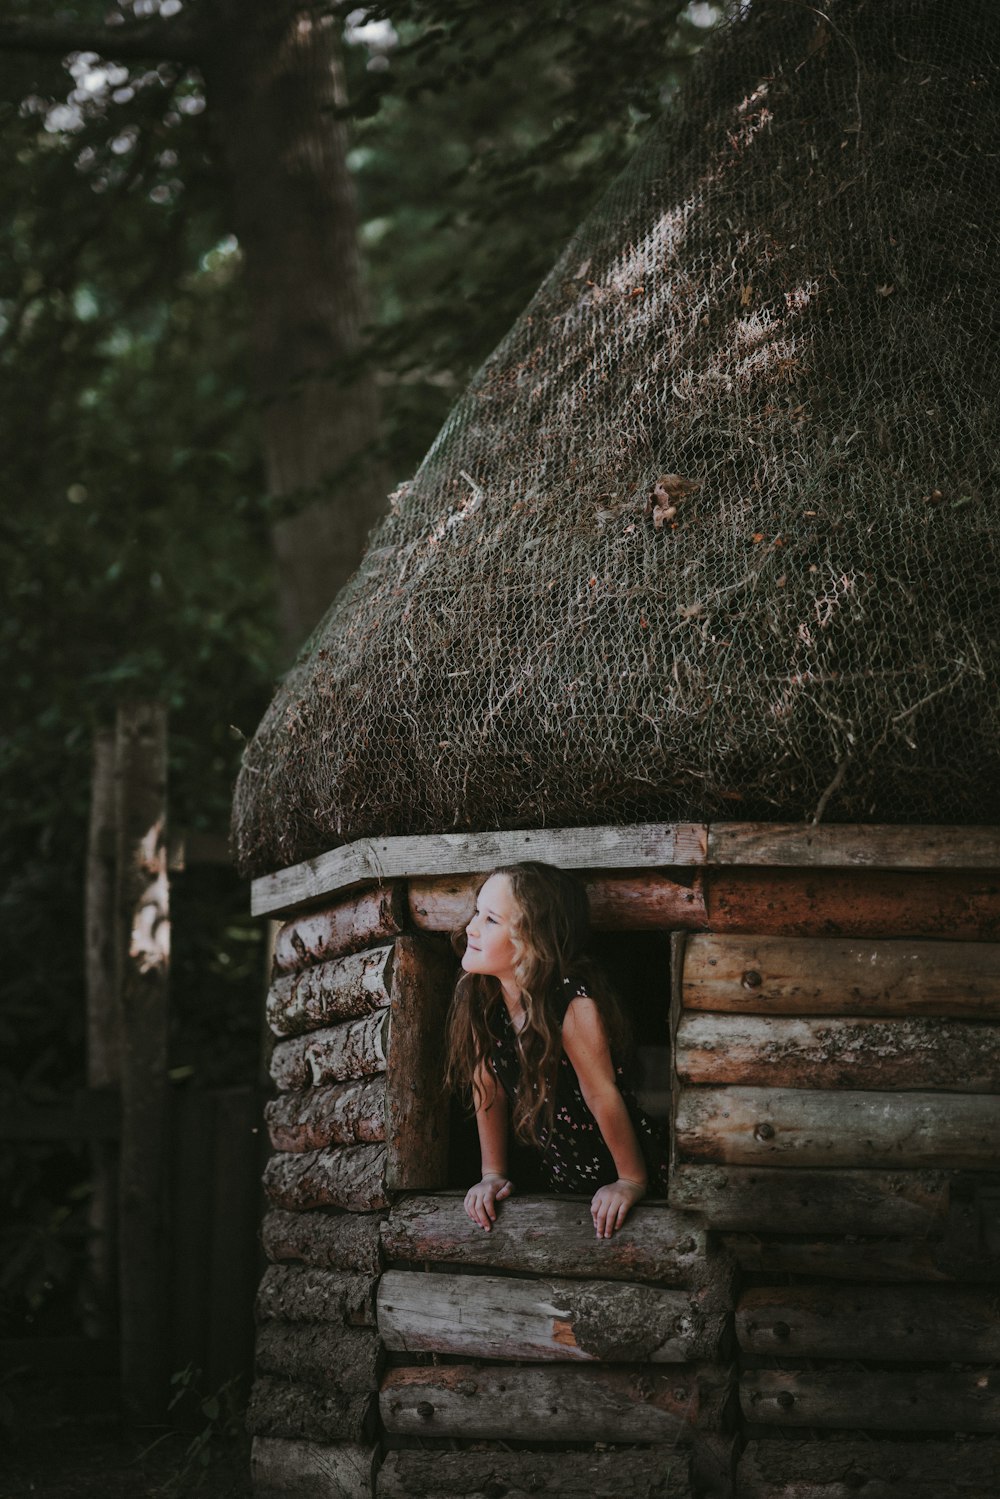 girl in nipa hut window looking upward under trees